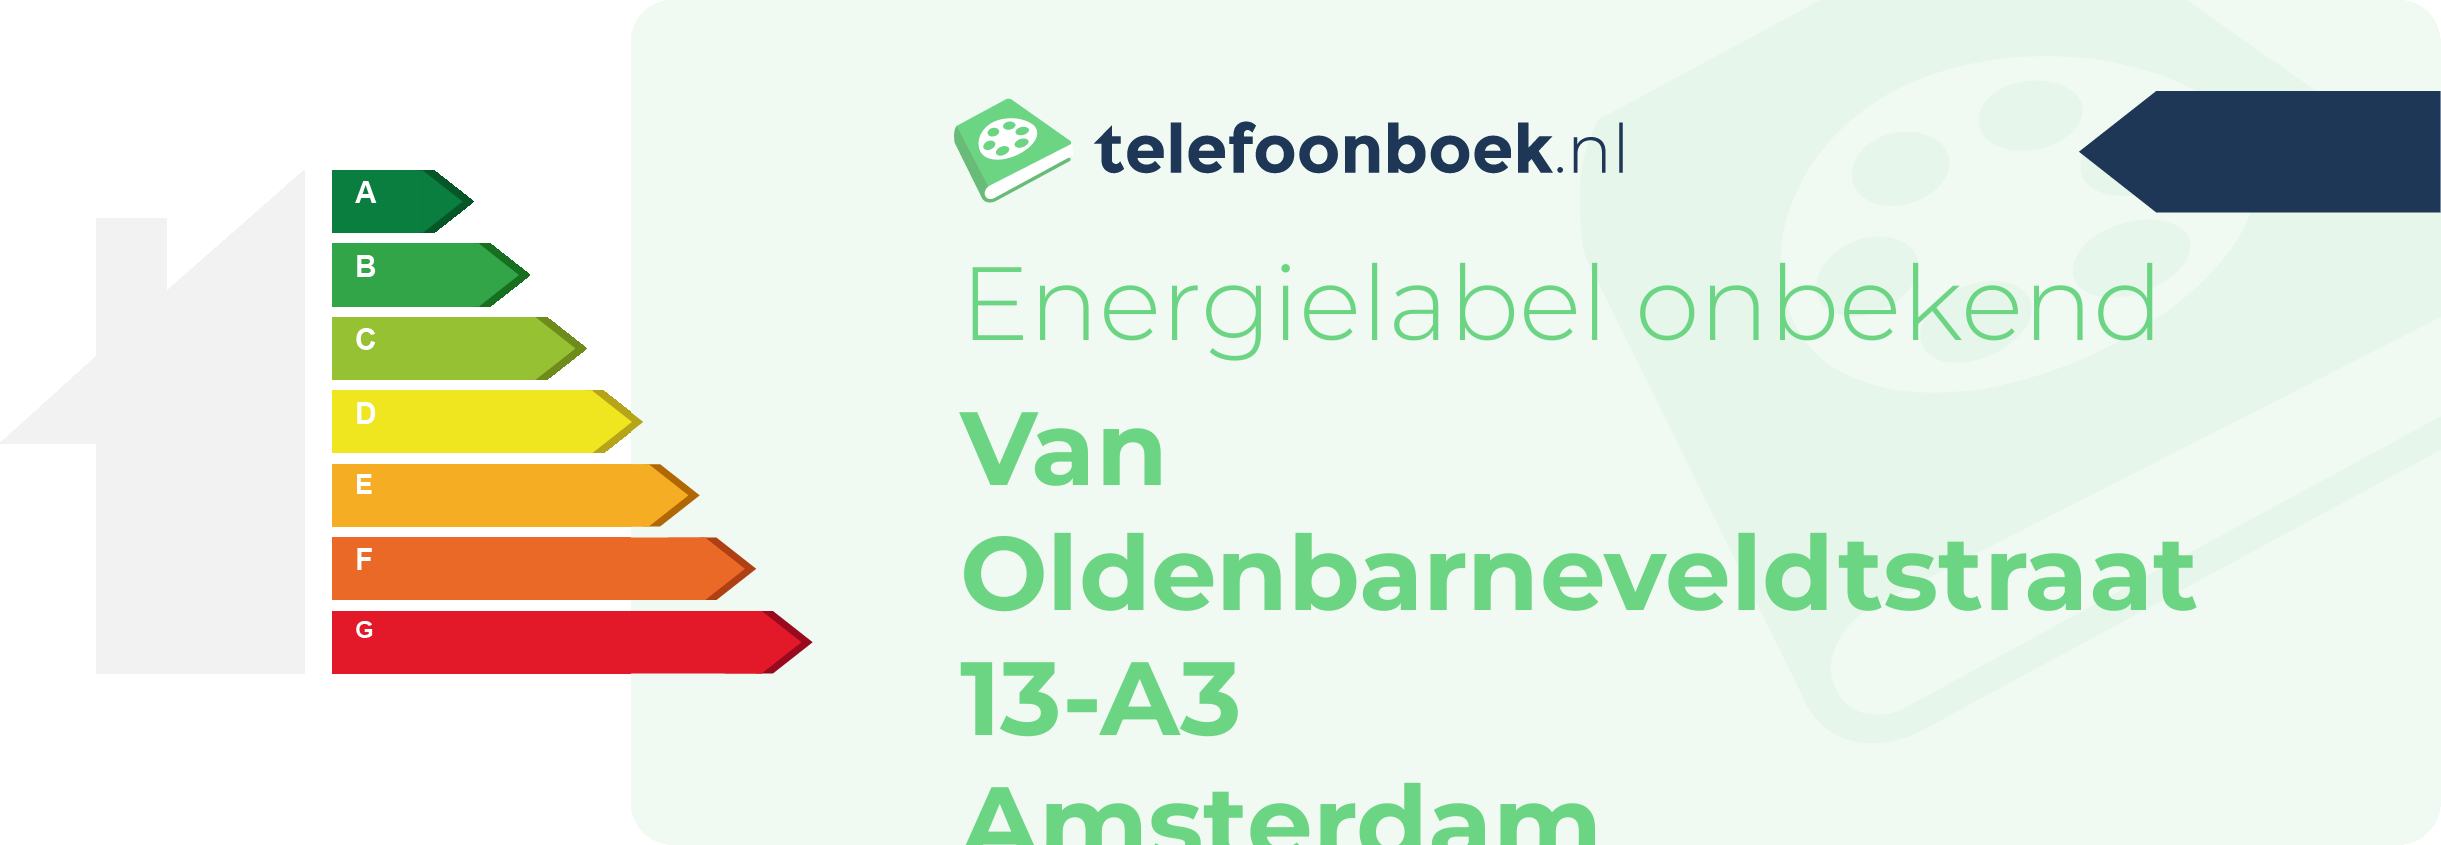 Energielabel Van Oldenbarneveldtstraat 13-A3 Amsterdam